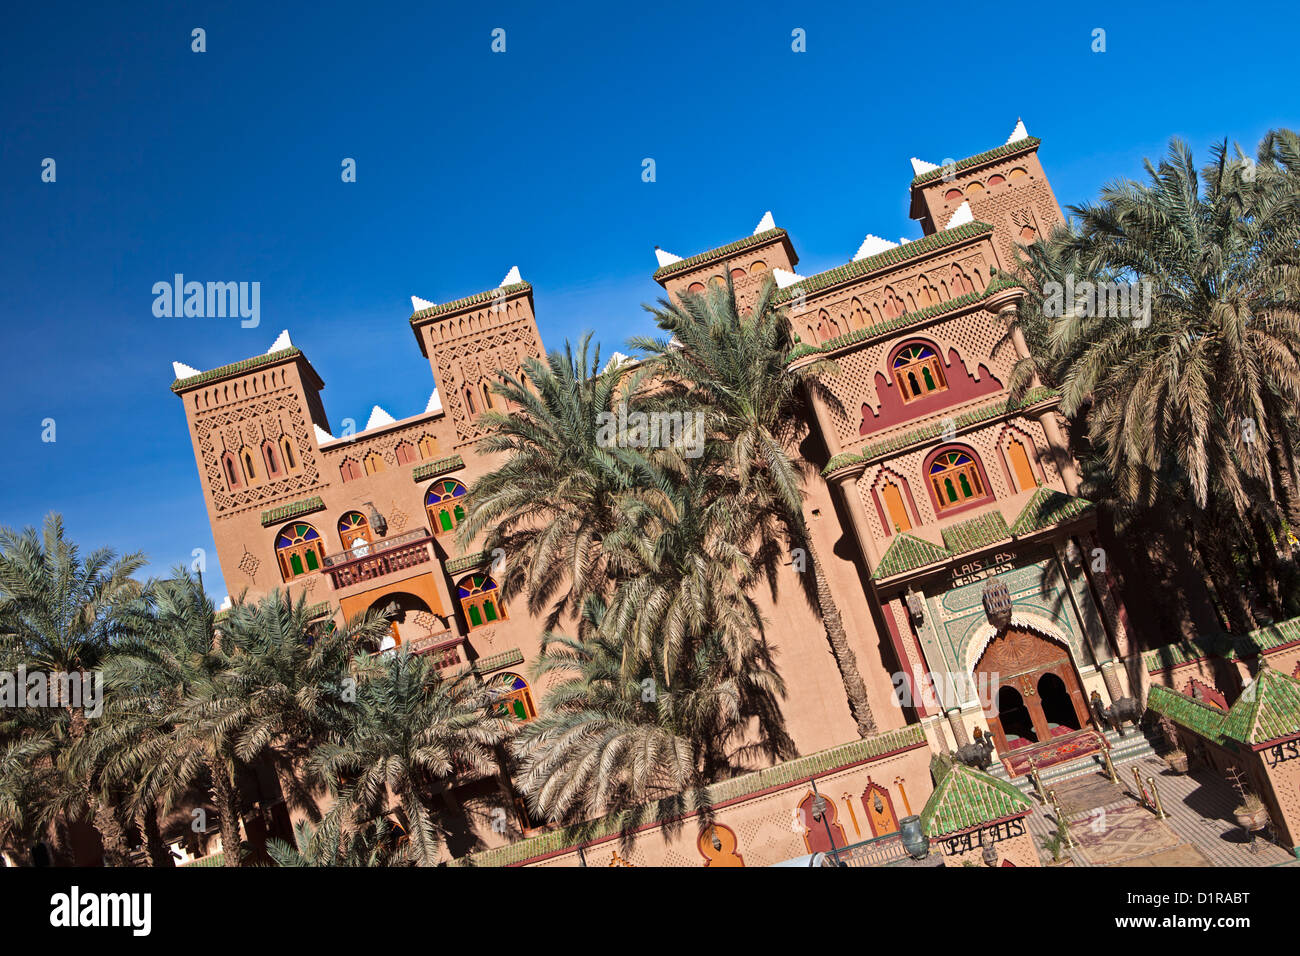 Le Maroc, Zagora, l'hôtel La kasbah. Banque D'Images